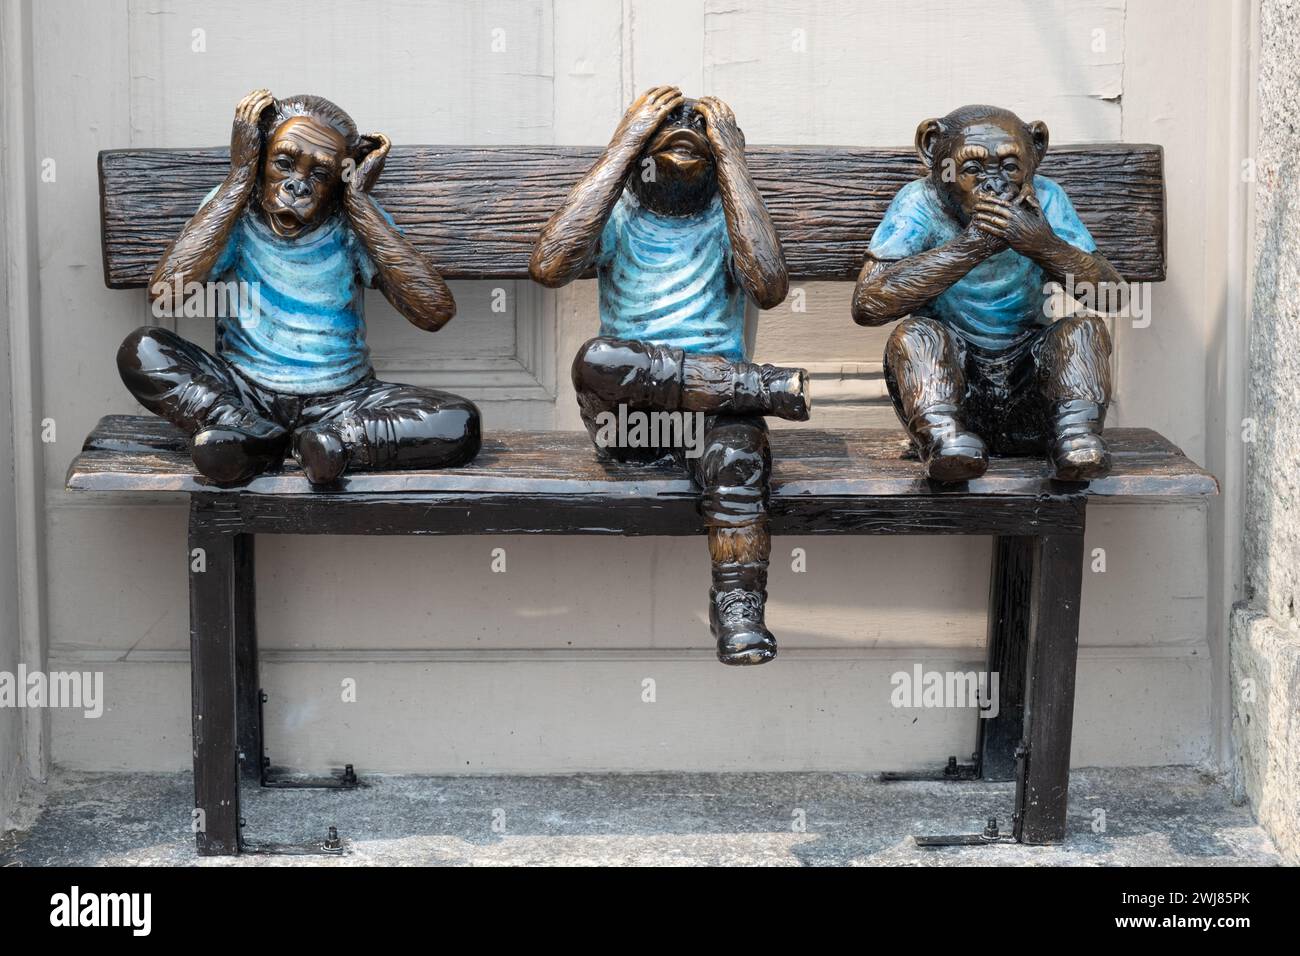 Three metal monkeys on a bench. Proverbial principle 'see no evil, hear no evil, speak no evil' Stock Photo